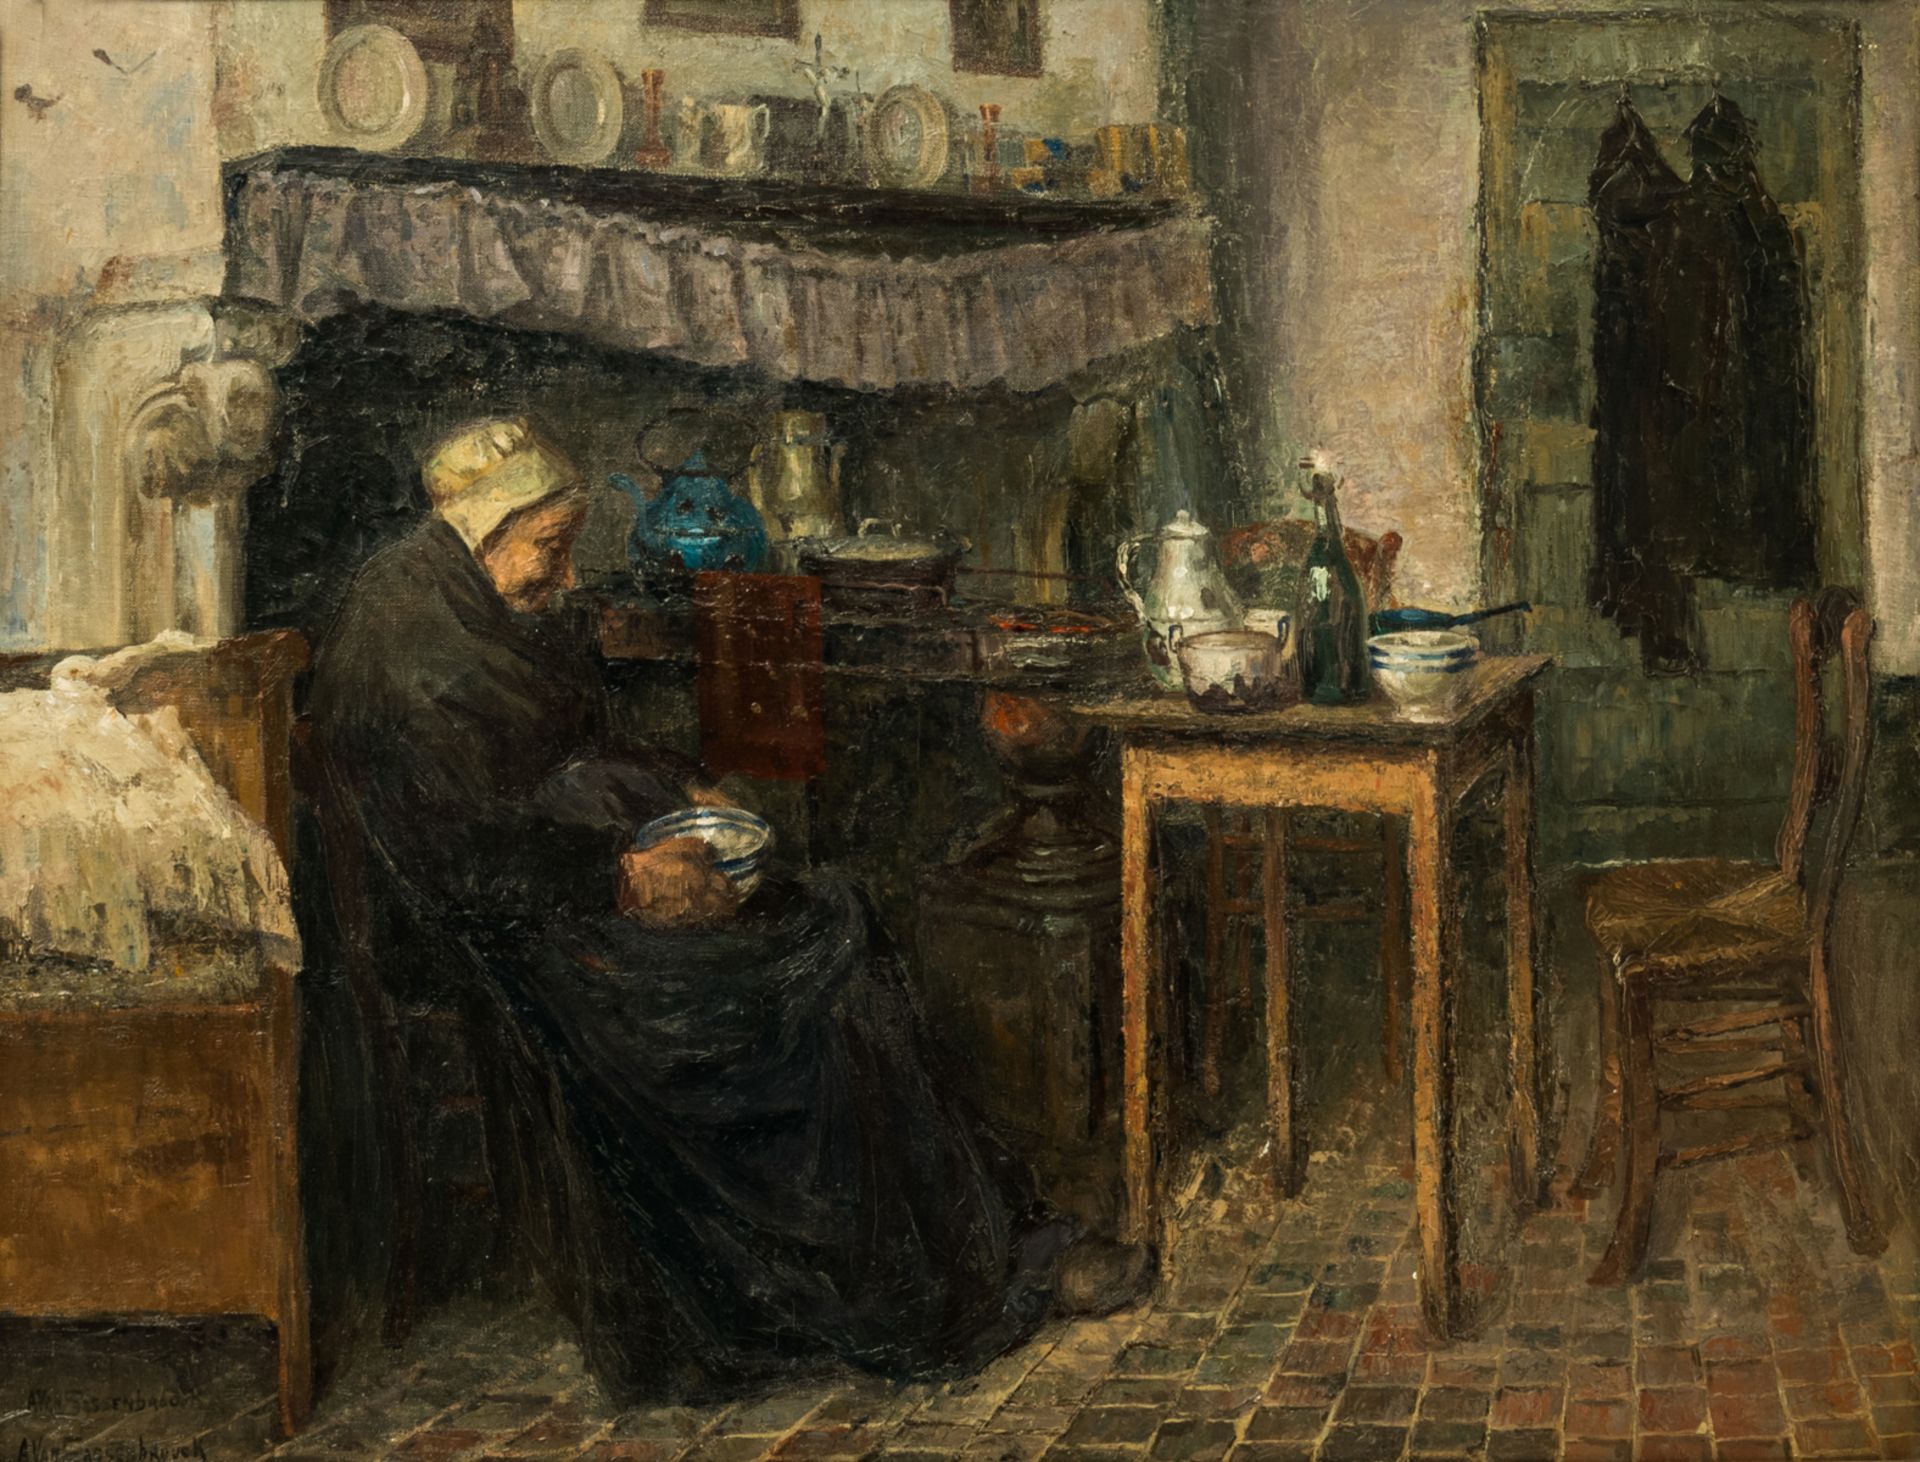 Van Sassenbrouck A., an old woman in an almshouse interior, oil on canvas, 71,5 x 92,5 cm